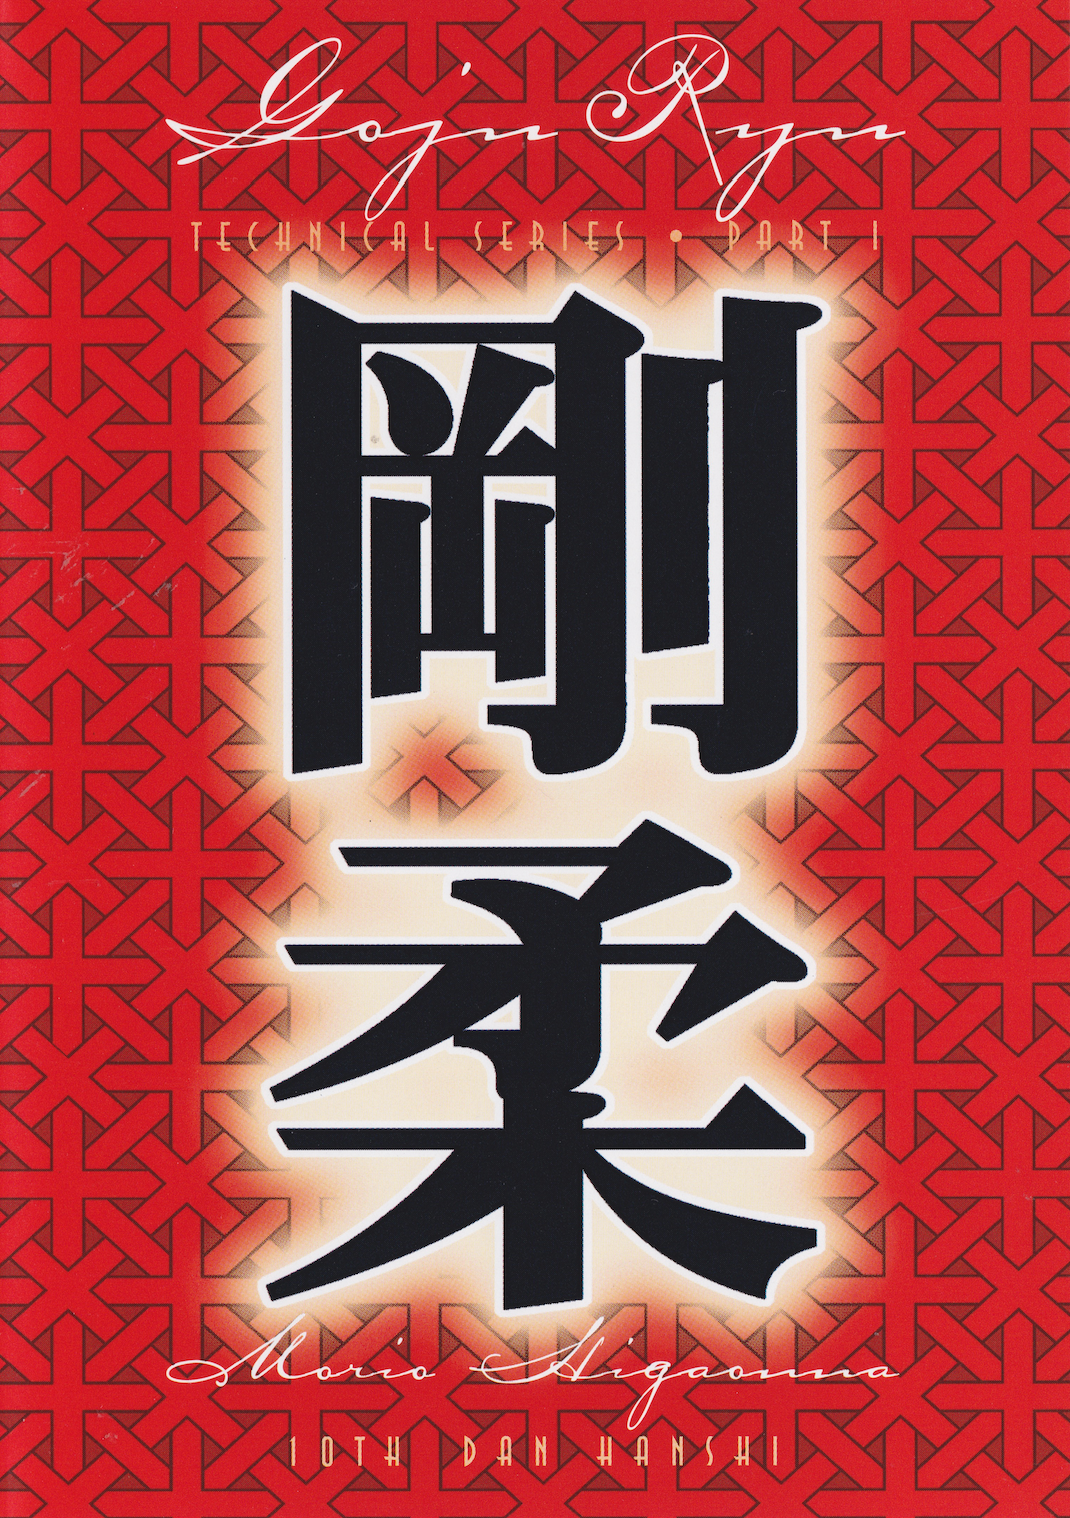 Goju Ryu Technical Series Part 1 DVD by Morio Higaonna - Budovideos Inc